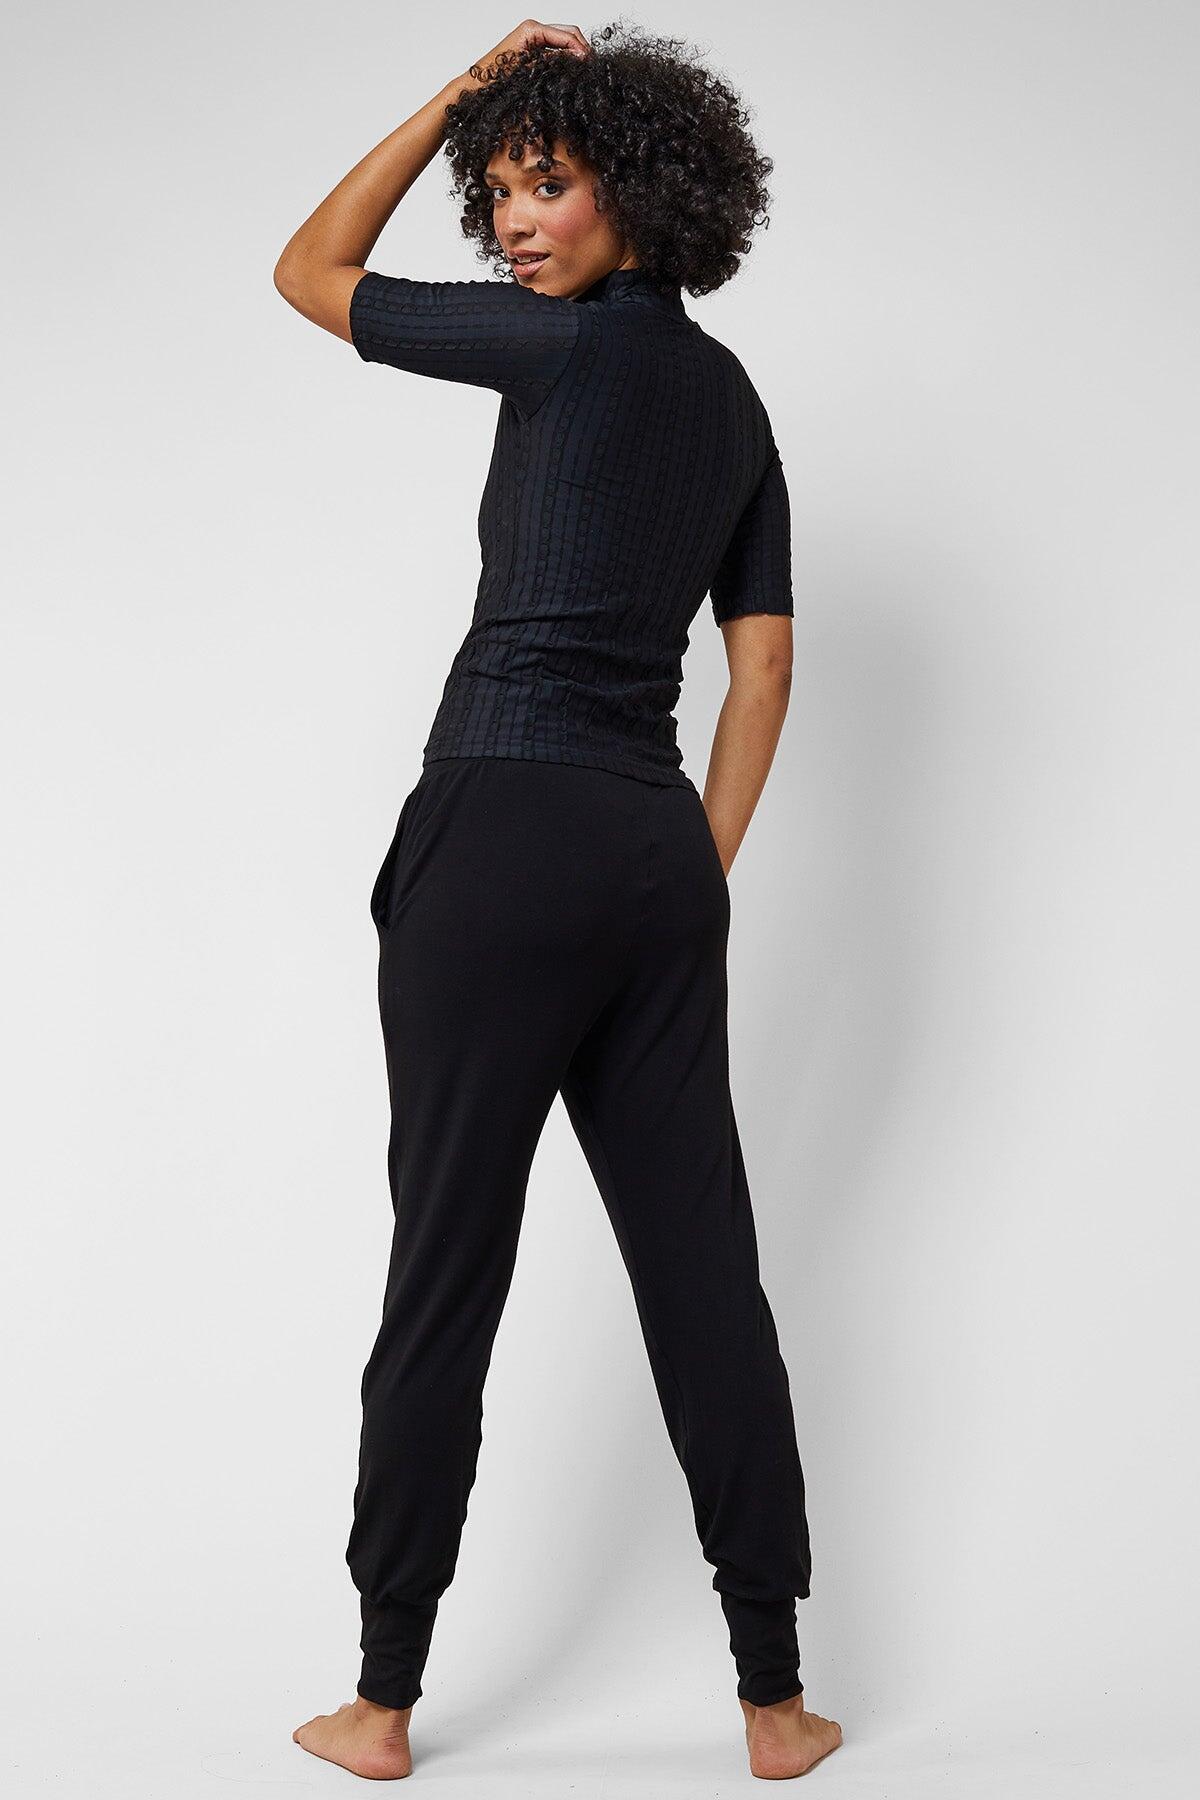 Lightweight Yoga Loose Side Pockets Cuffed Pant Black 4/6